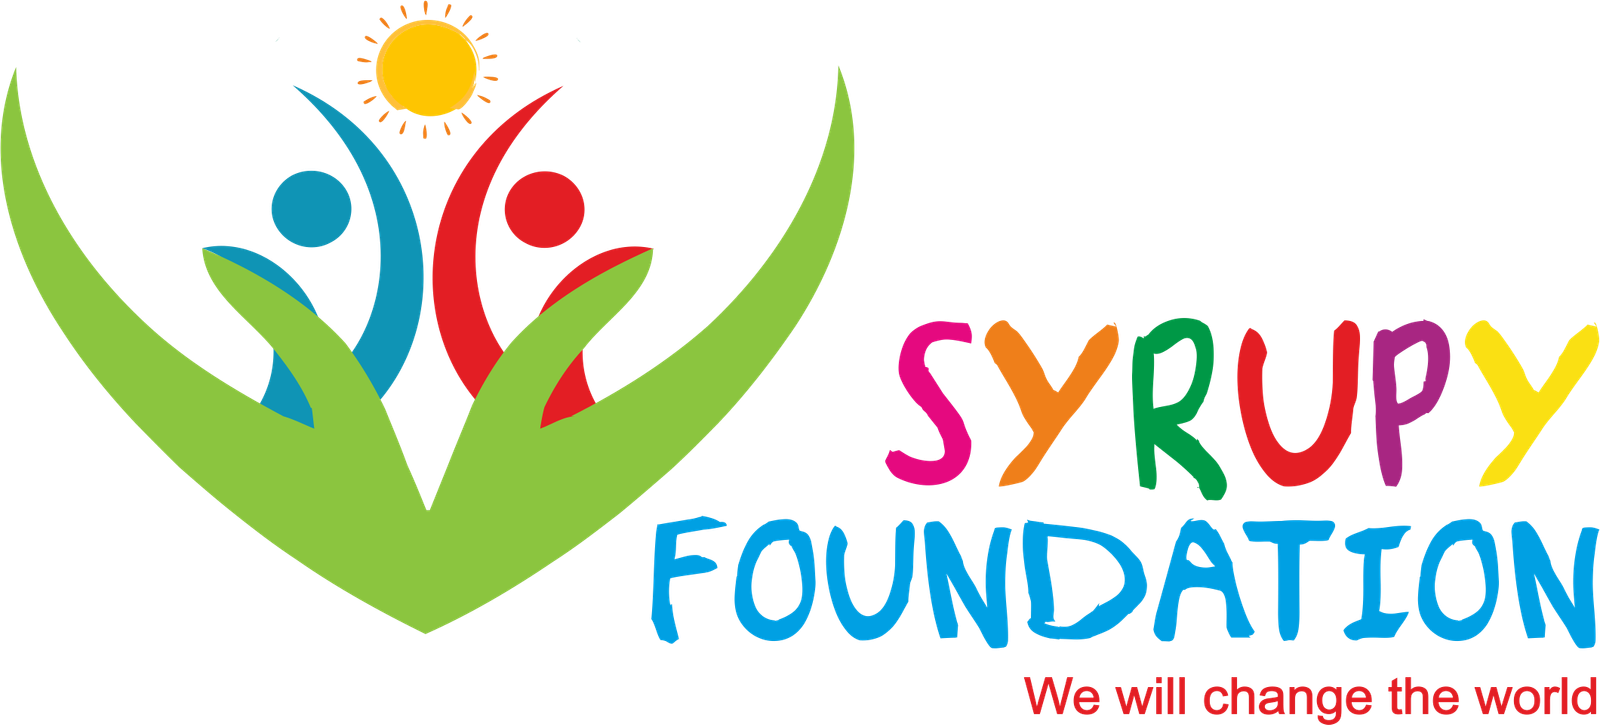 Syrupy Foundation